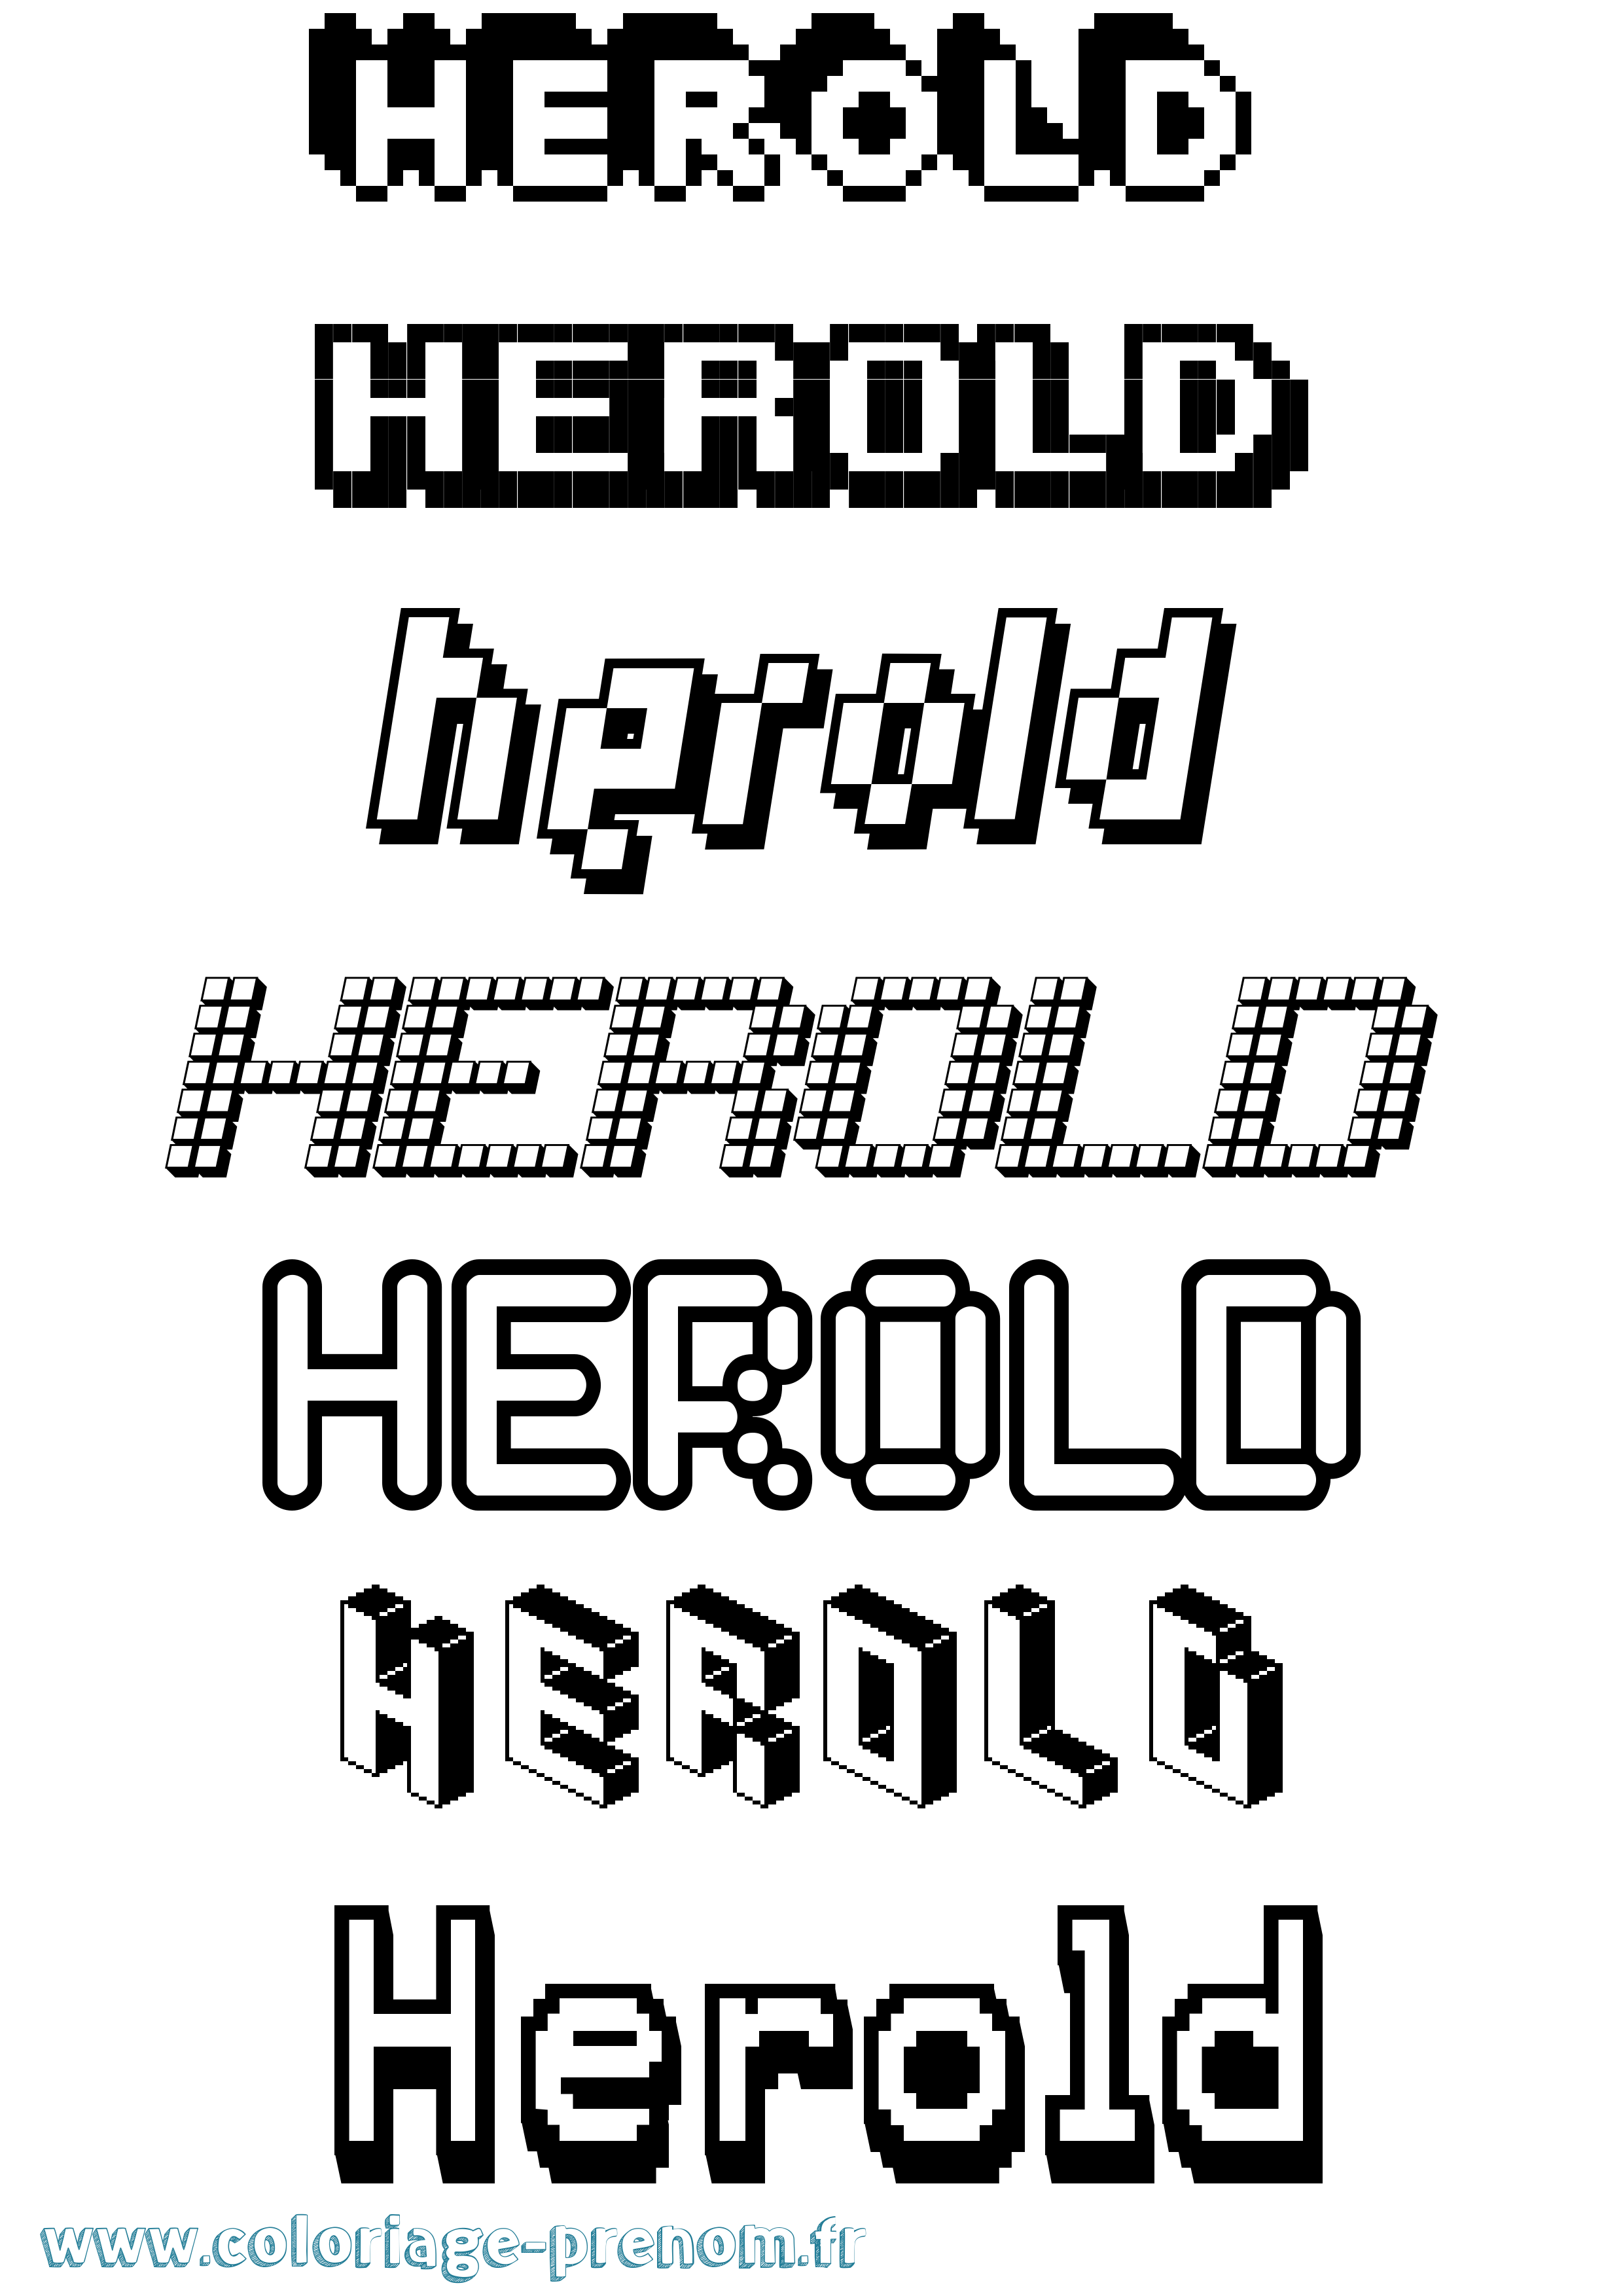 Coloriage prénom Herold Pixel